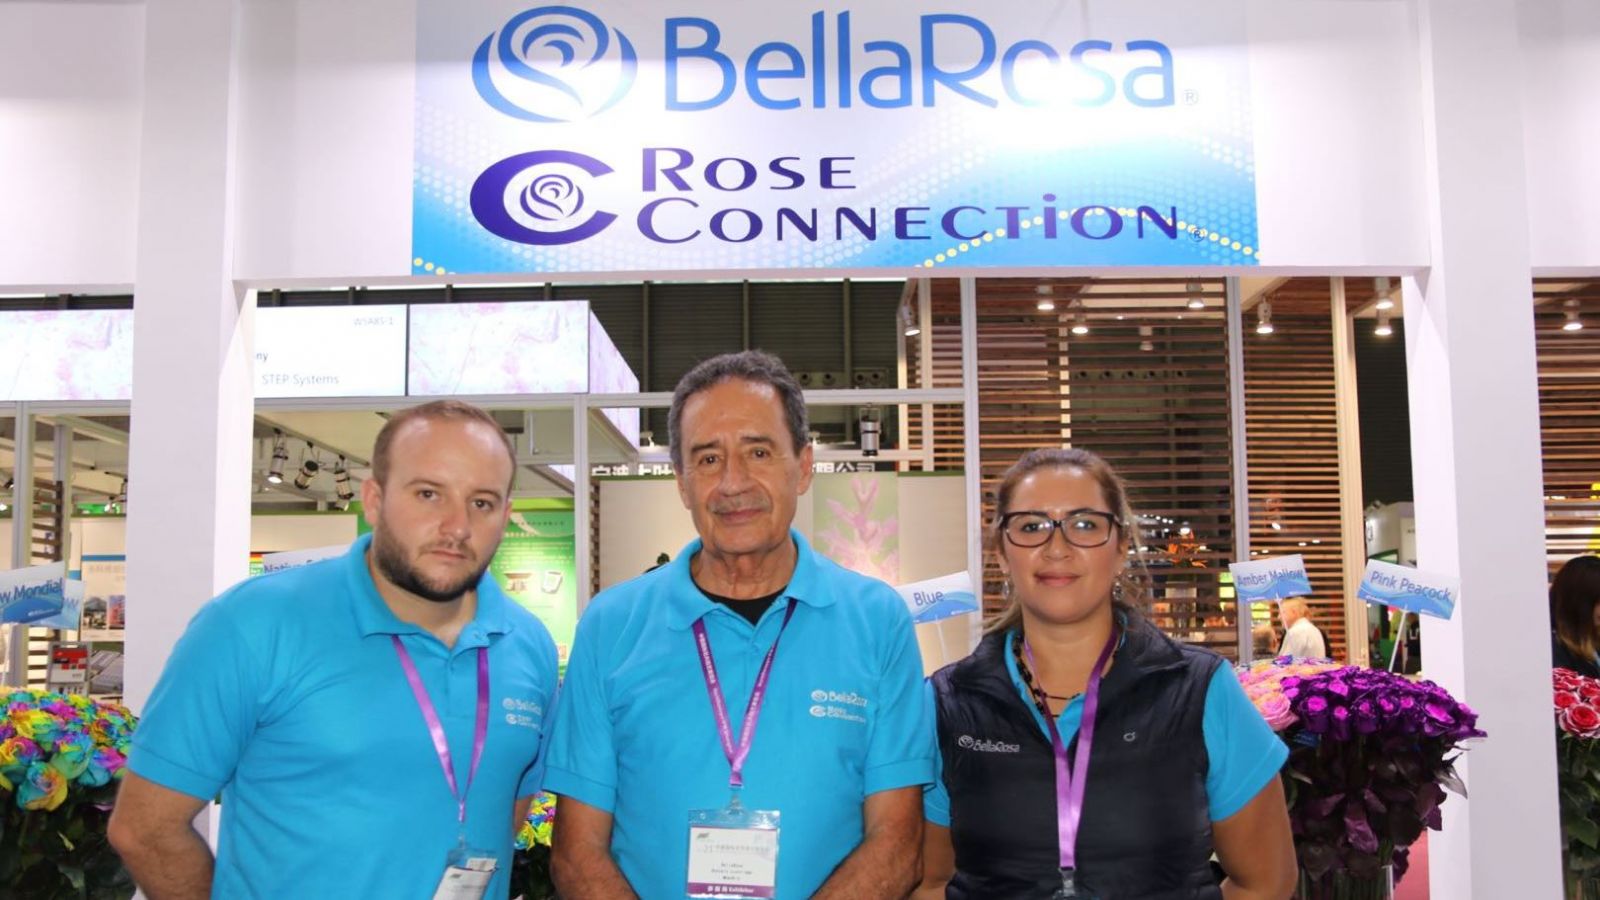 BellaRosa and Rose Connection representatives